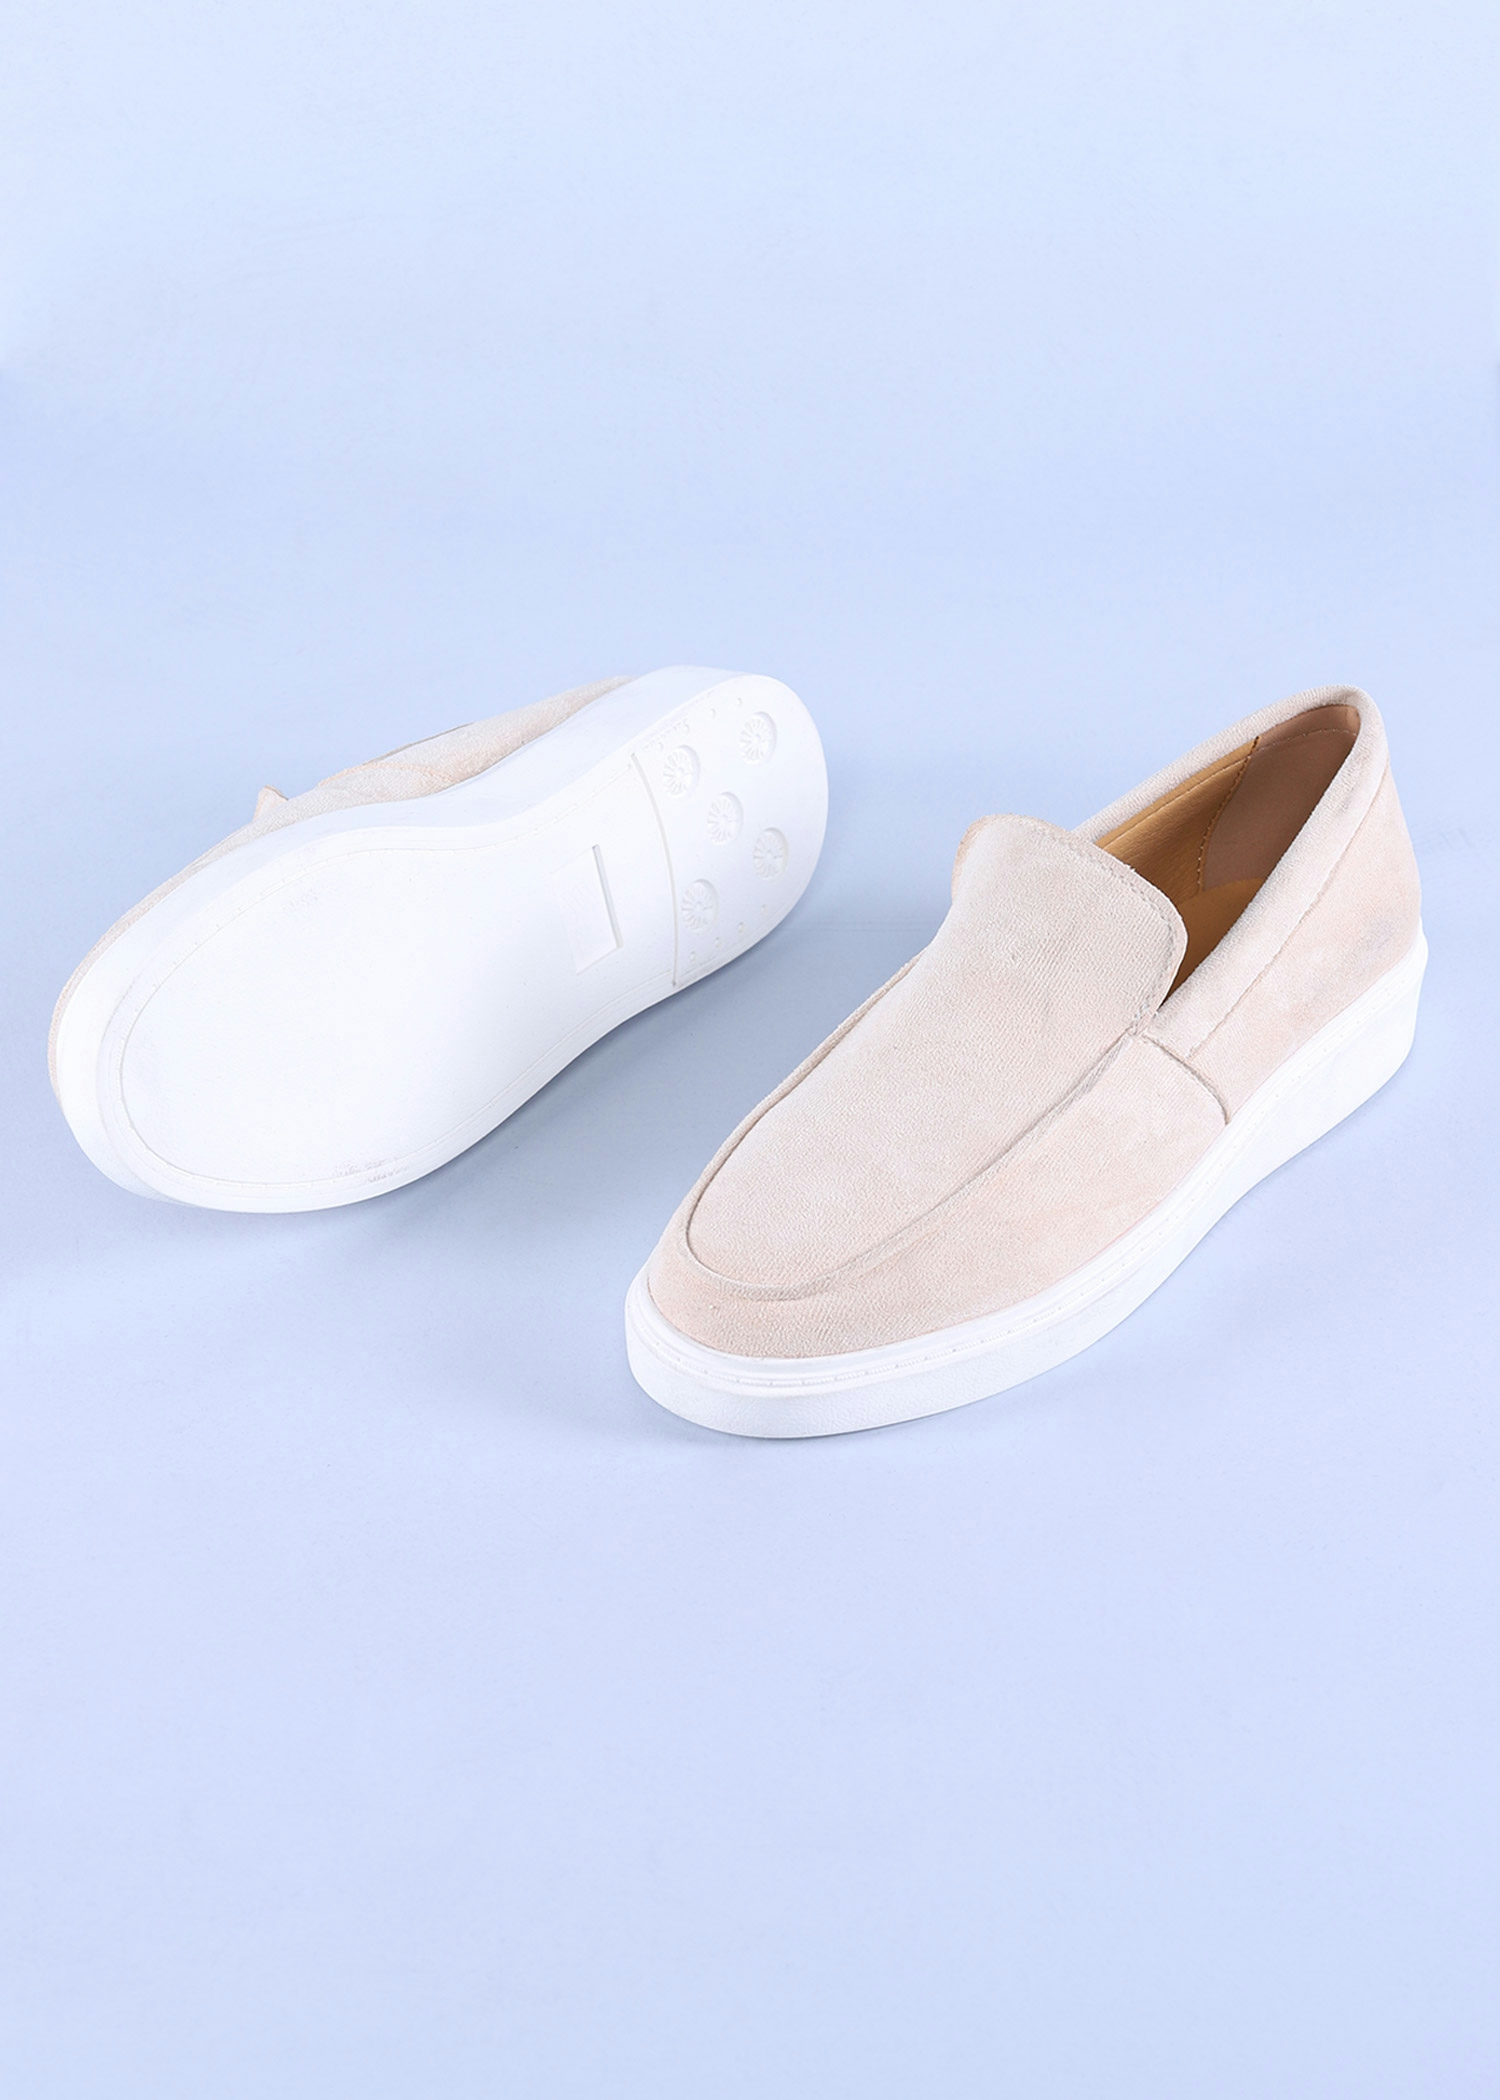 segura mens shoes cream color sole